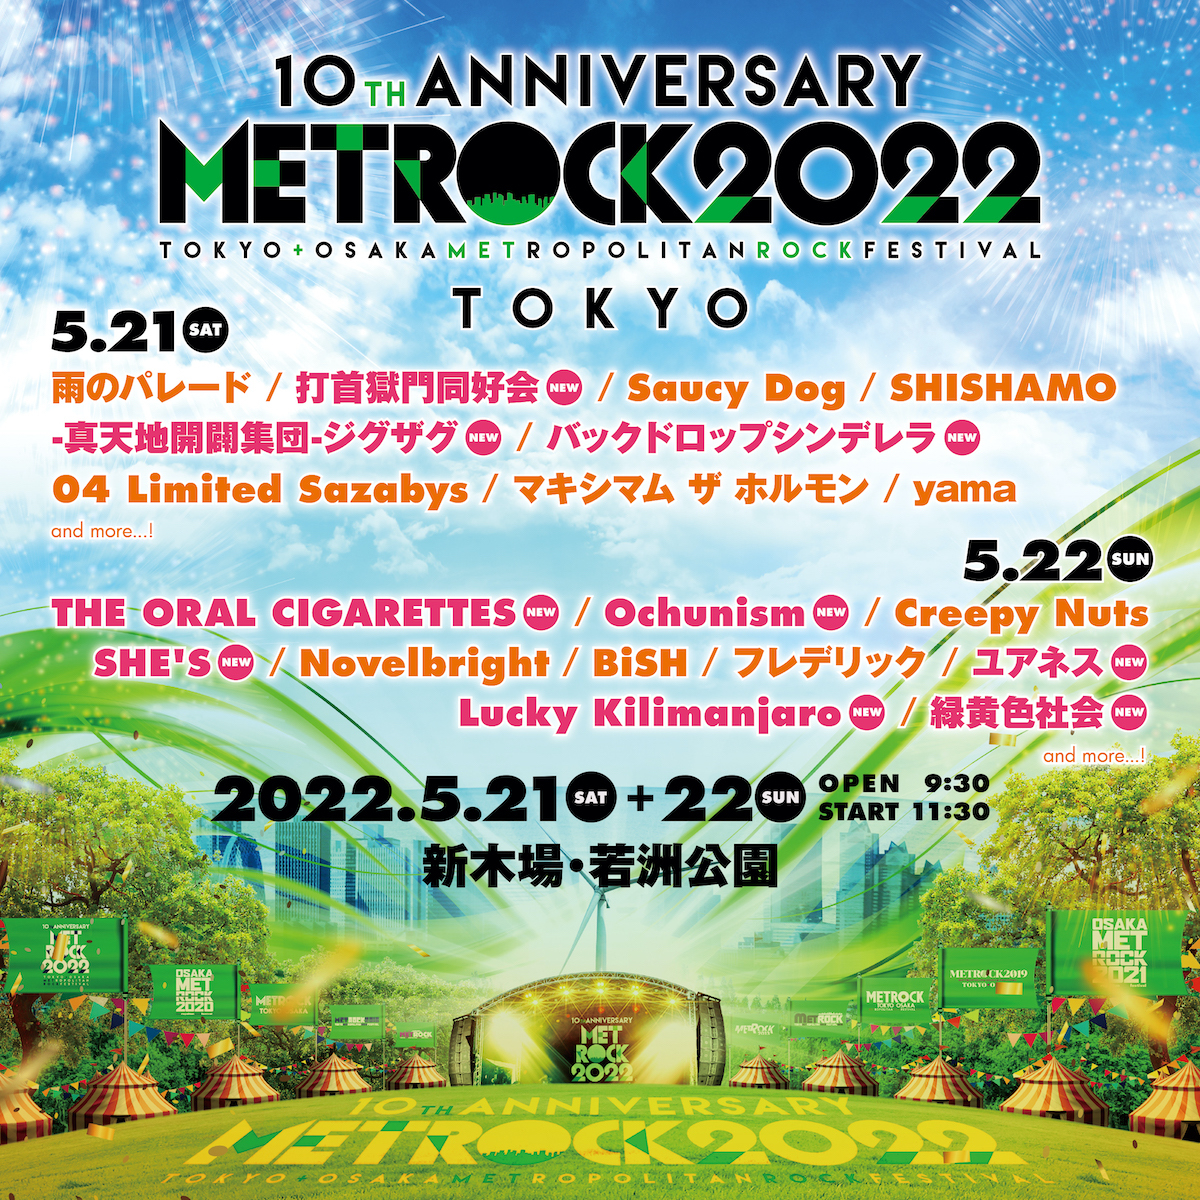 TOKYO METROPOLITAN ROCK FESTIVAL 2022